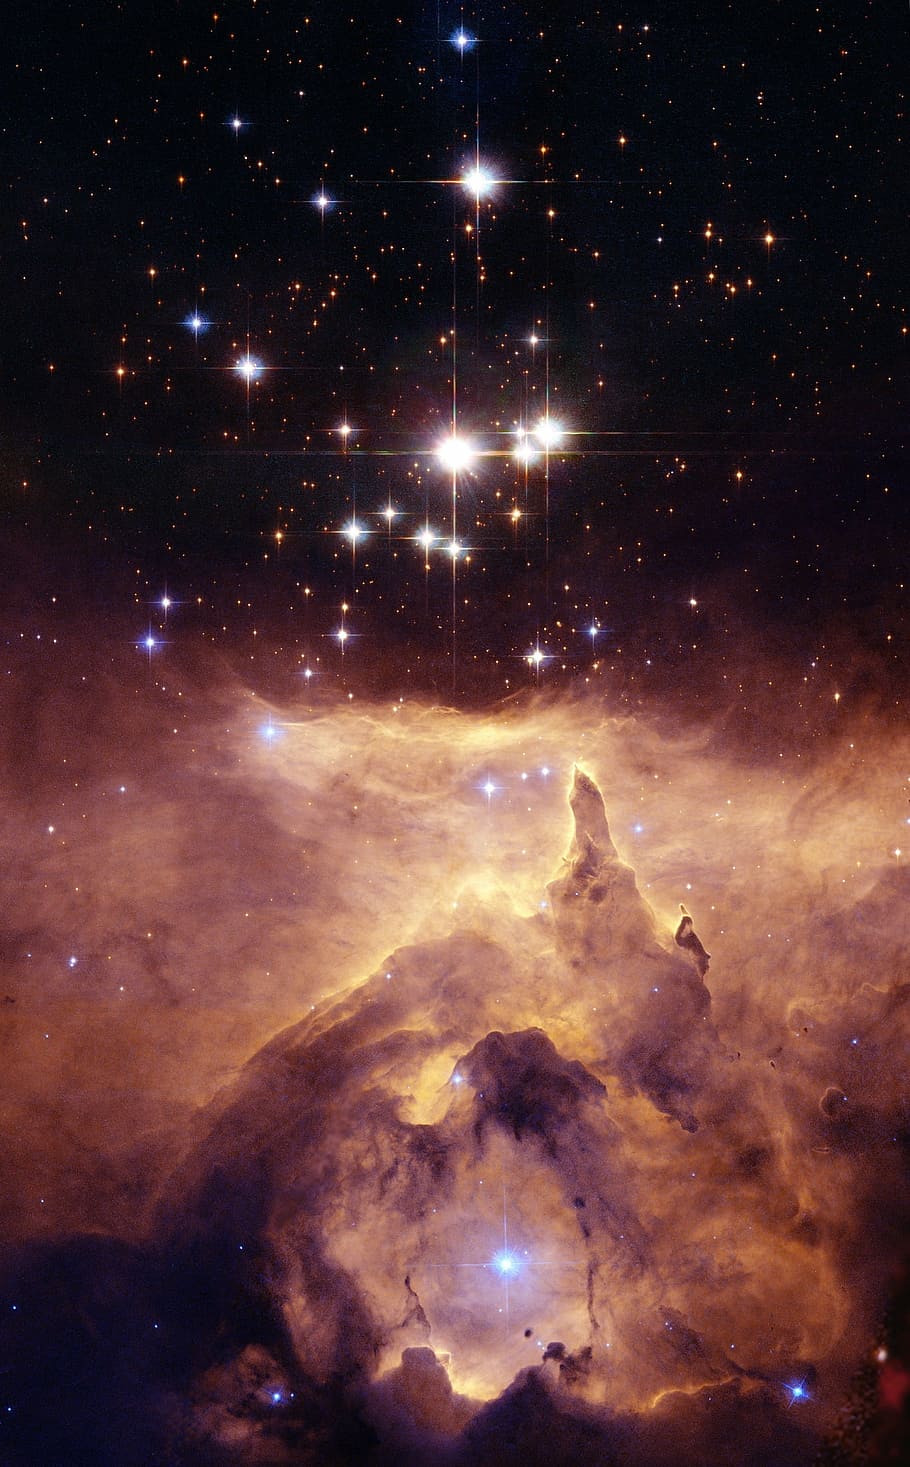 bintang di langit, lobster nebula, ngc 6357, nebula difus, ruang, kosmos, alam semesta, langit, bintang, lampu